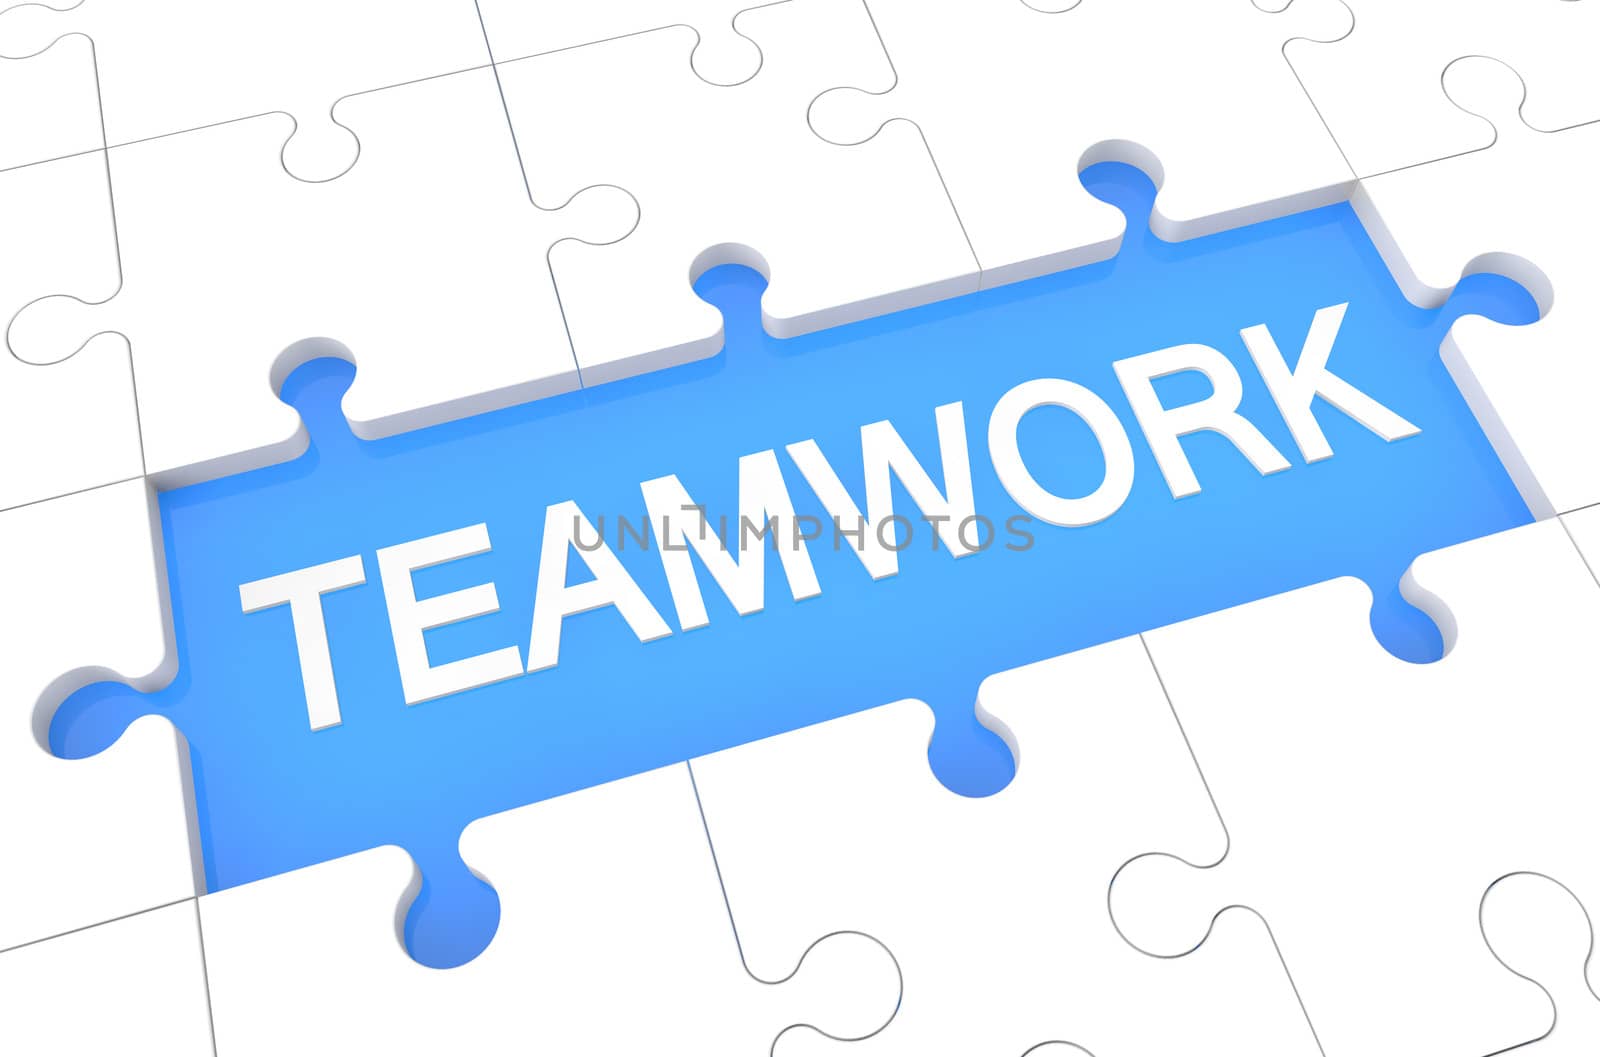 Teamwork - puzzle 3d render illustration with word on blue background